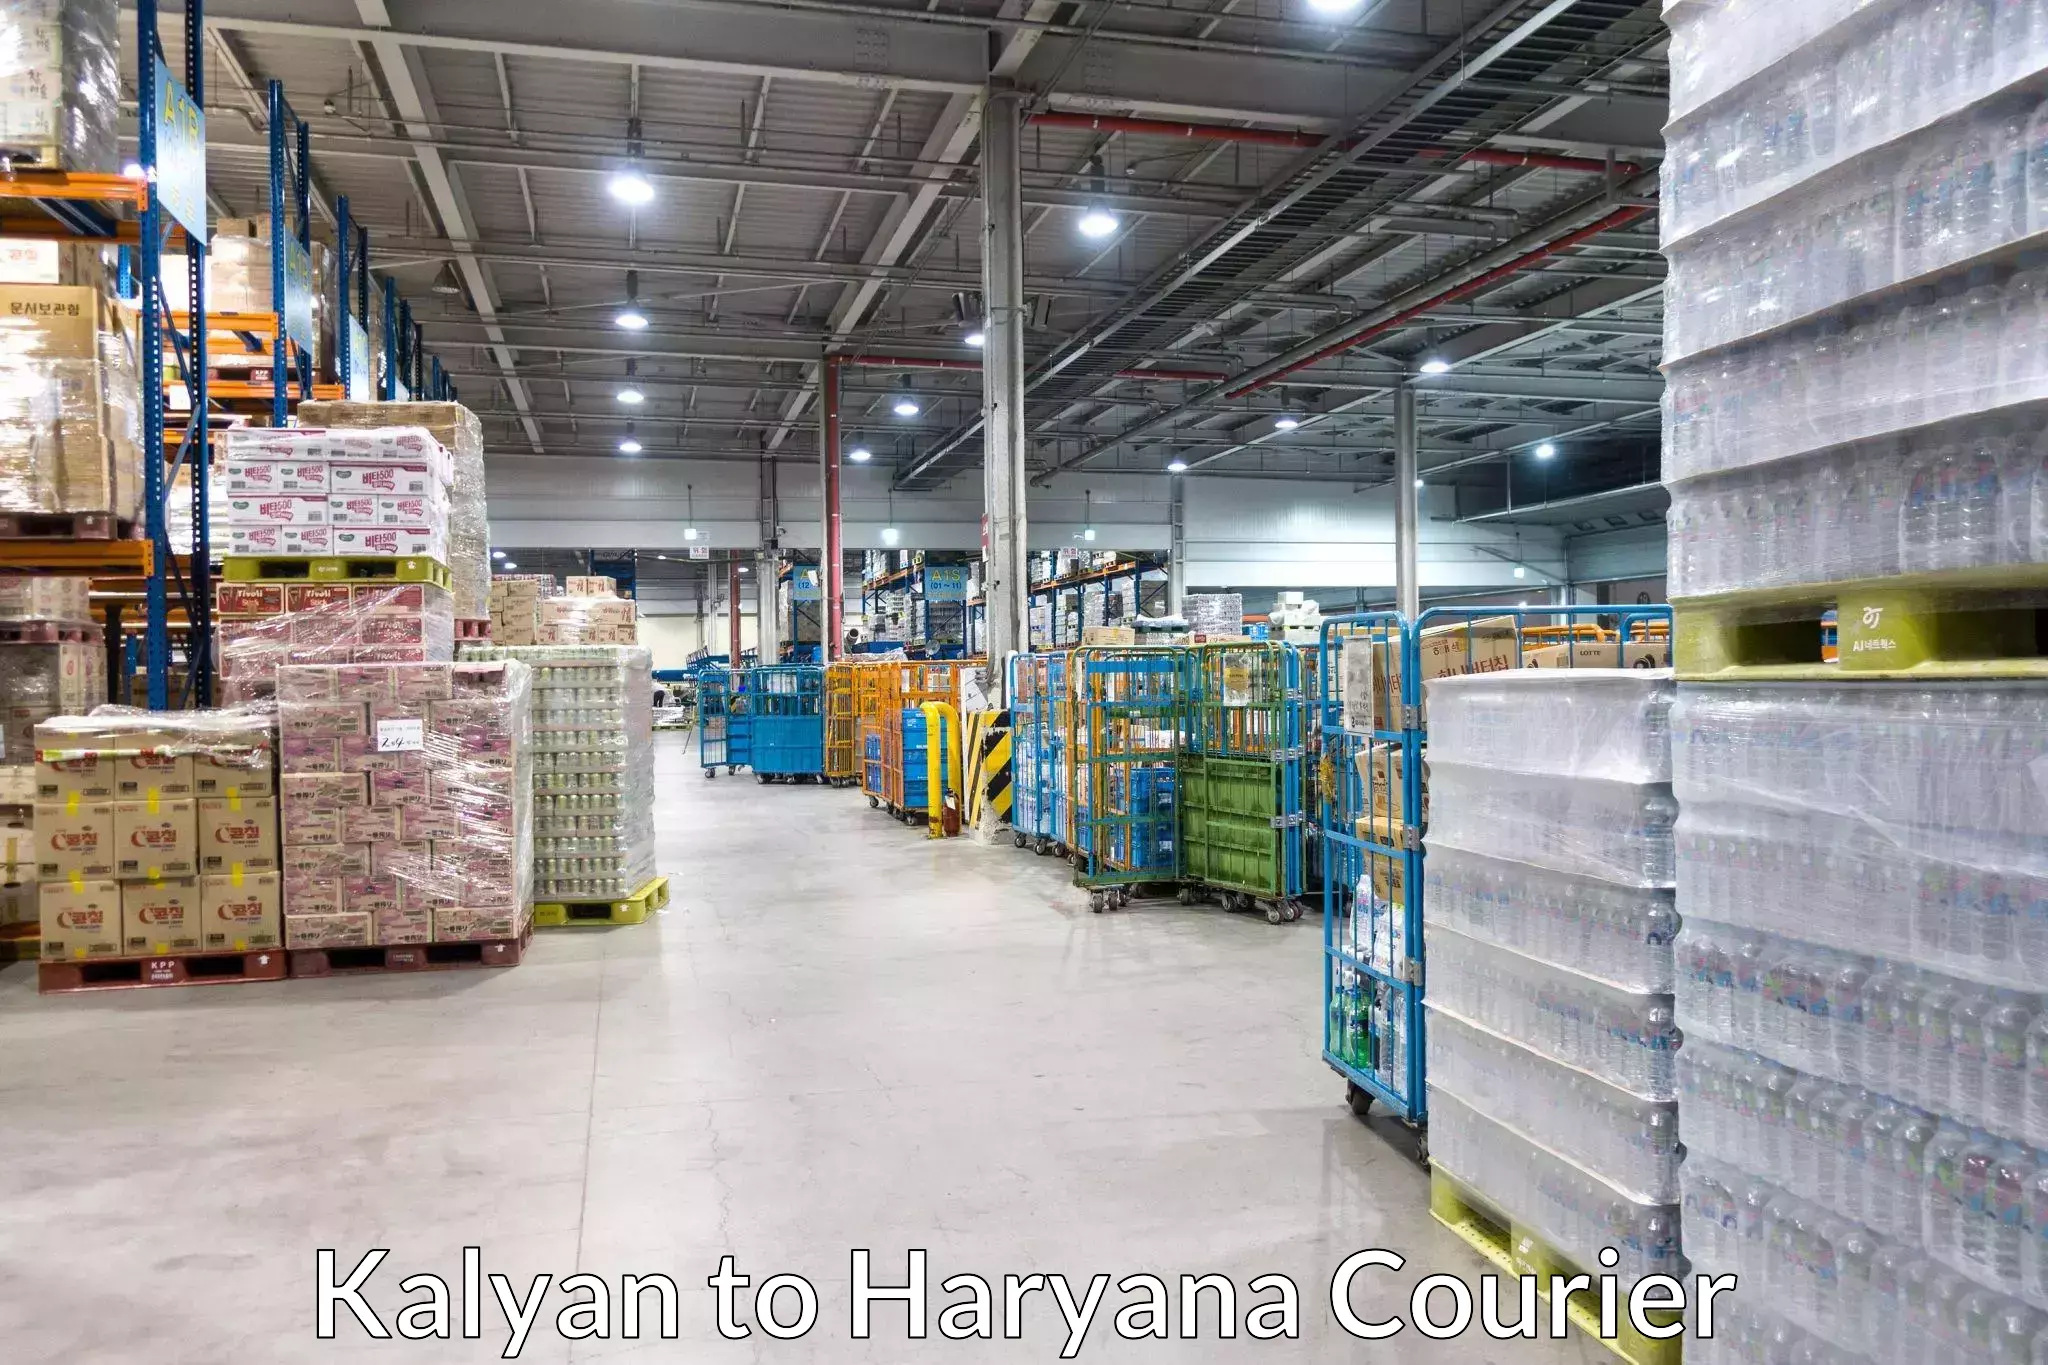 Courier service comparison Kalyan to Haryana